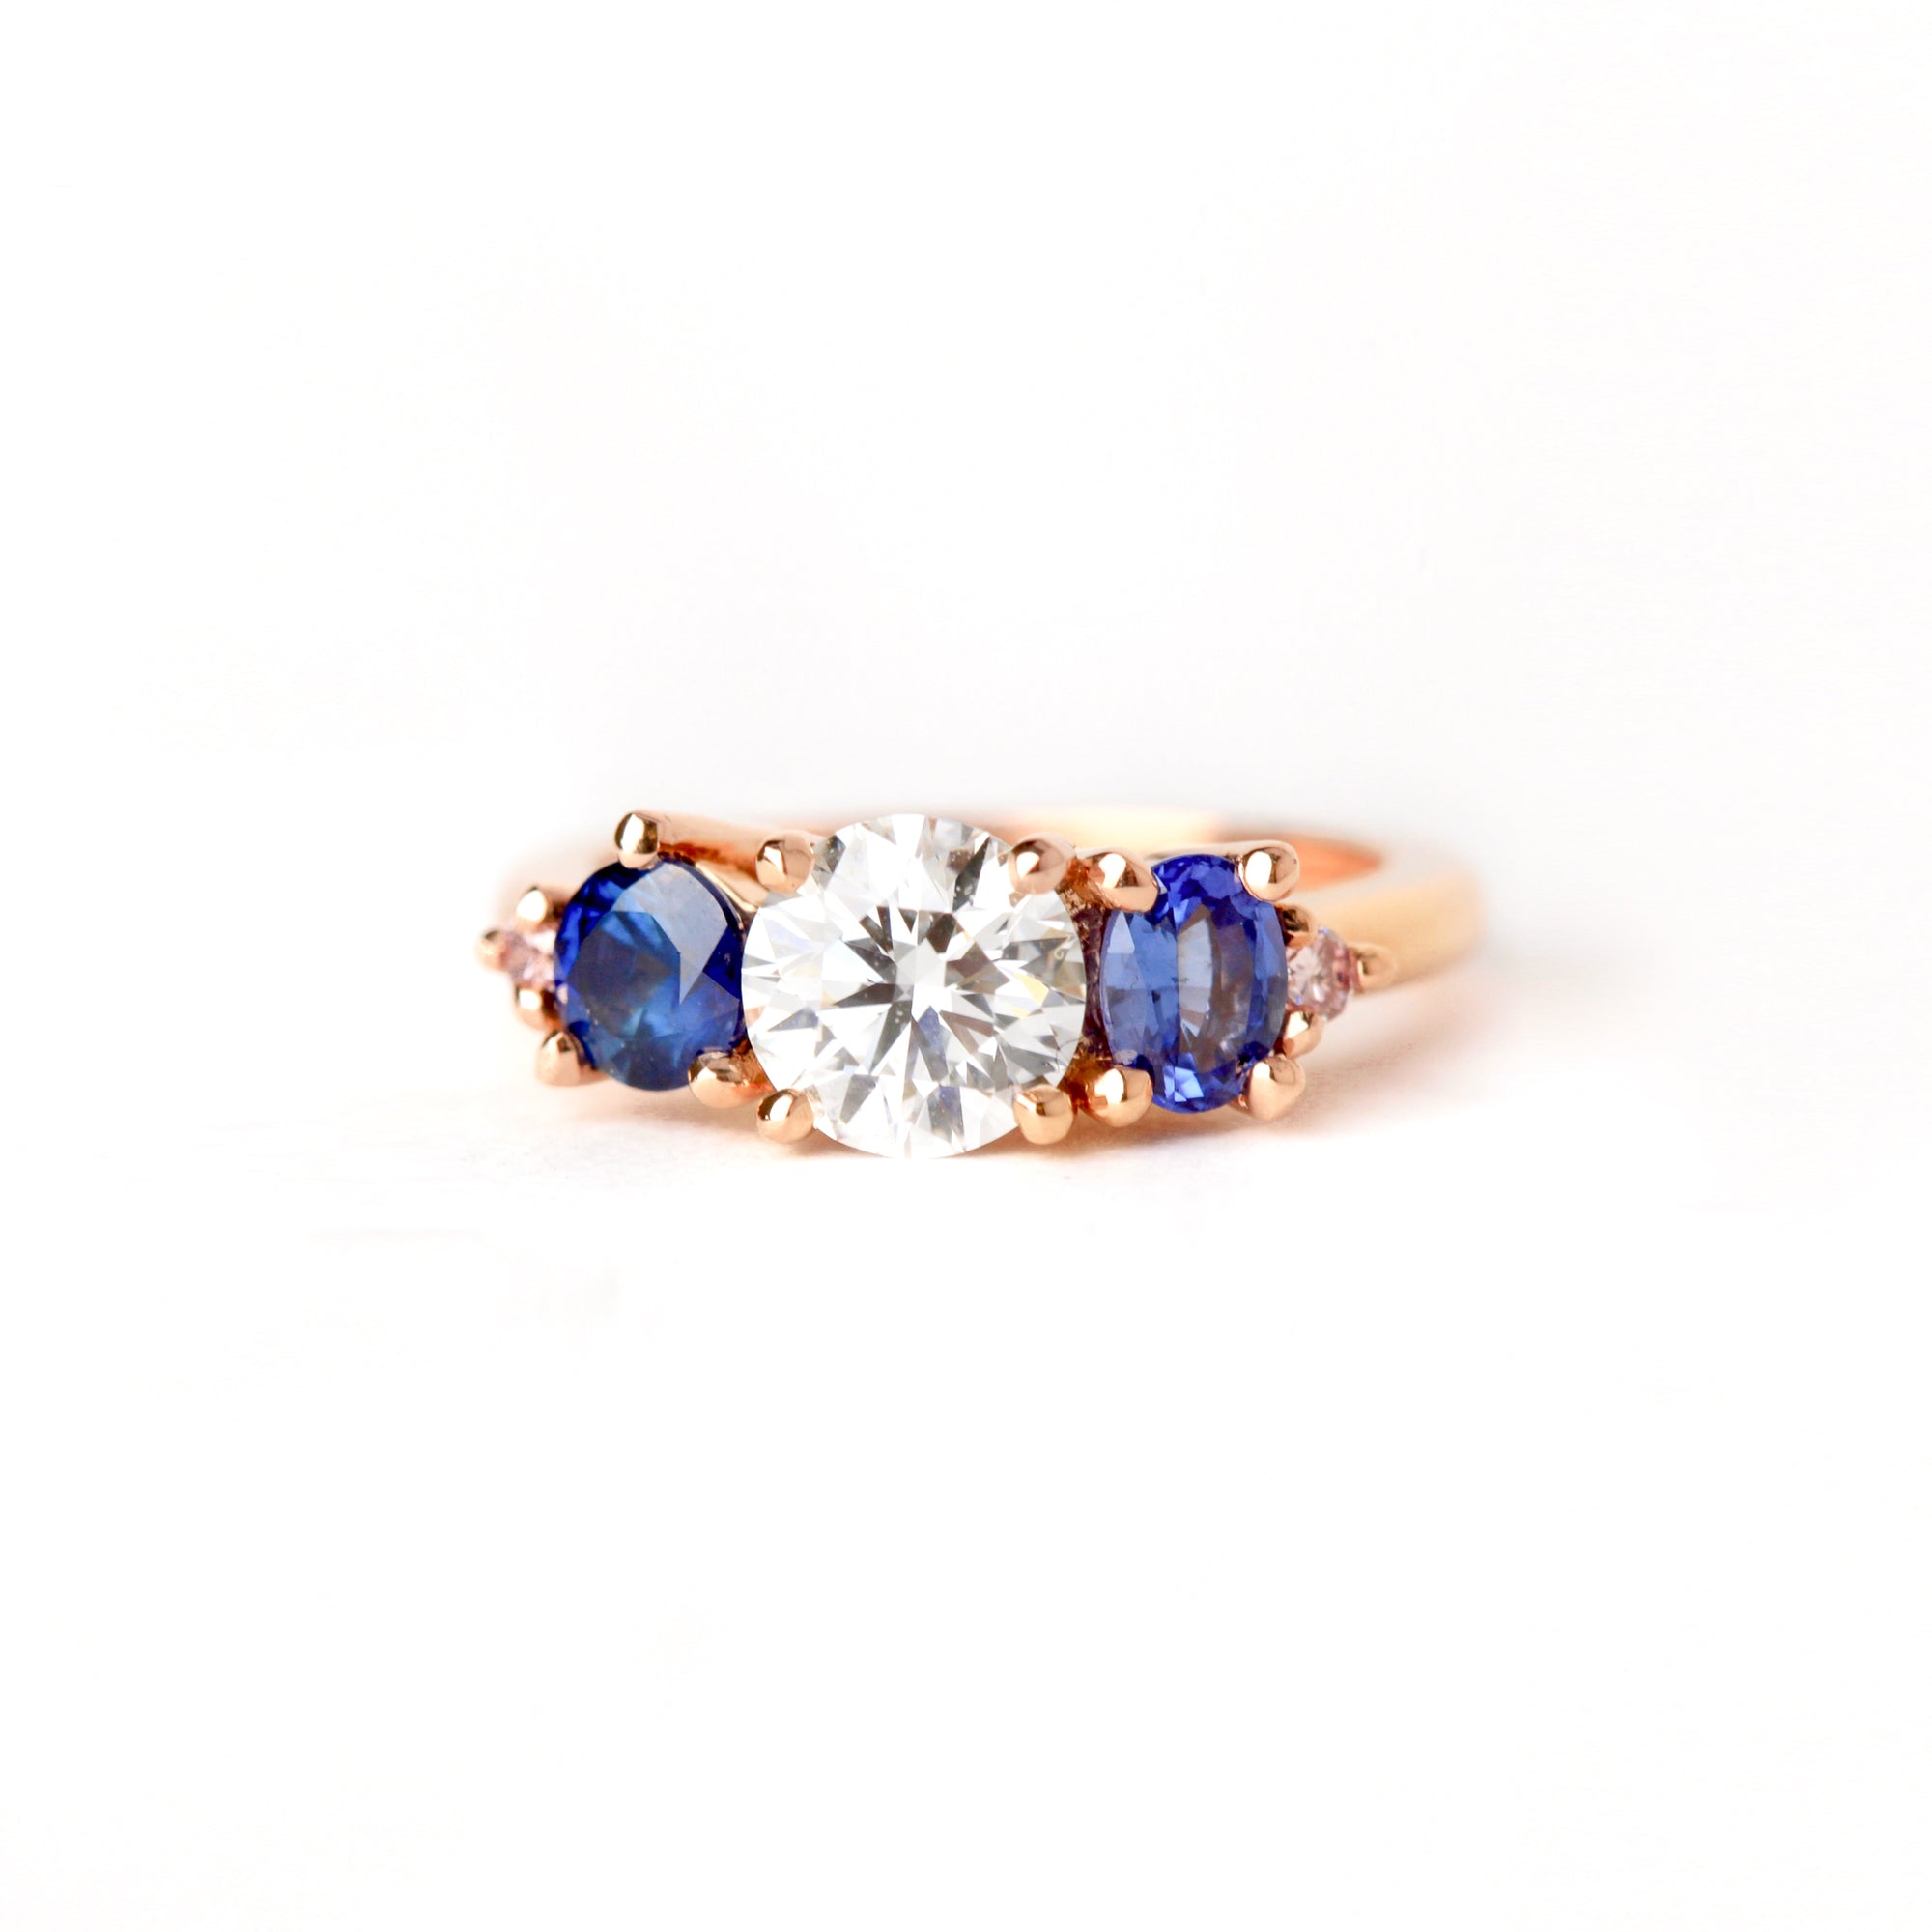 Handmade Diamond and Ethically Sourced Australian Sapphire Cluster Ring in 18ct Rose Gold, Custom, Bespoke